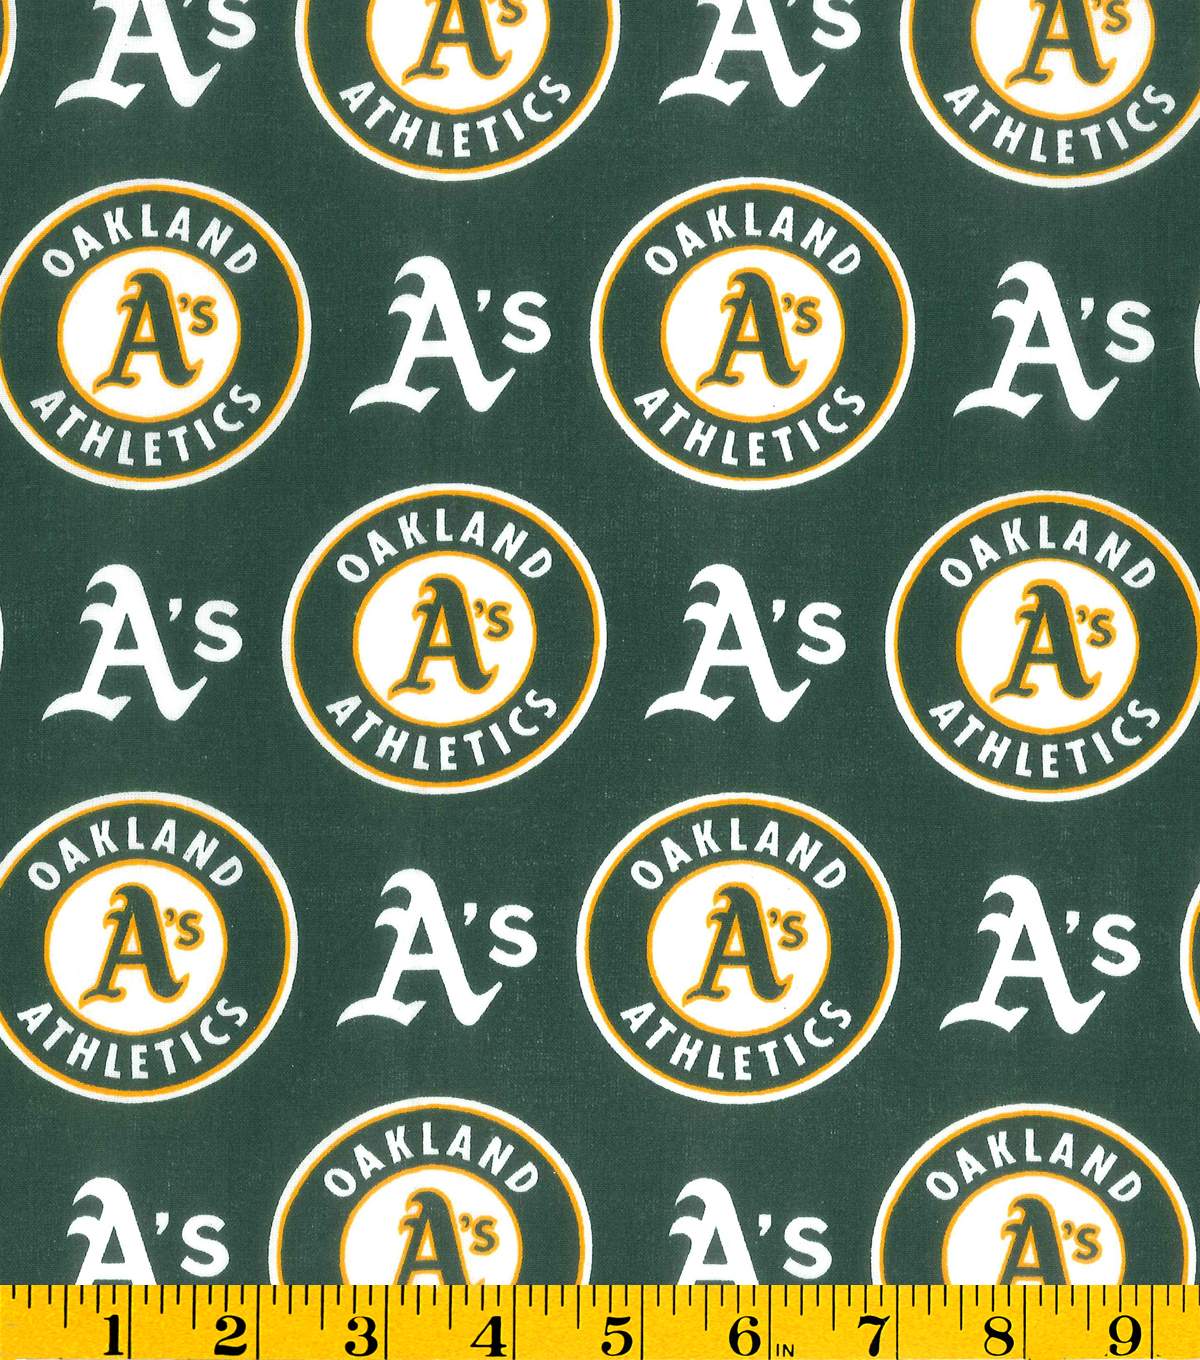 Oakland Athletics Wallpapers - Wallpaper Cave